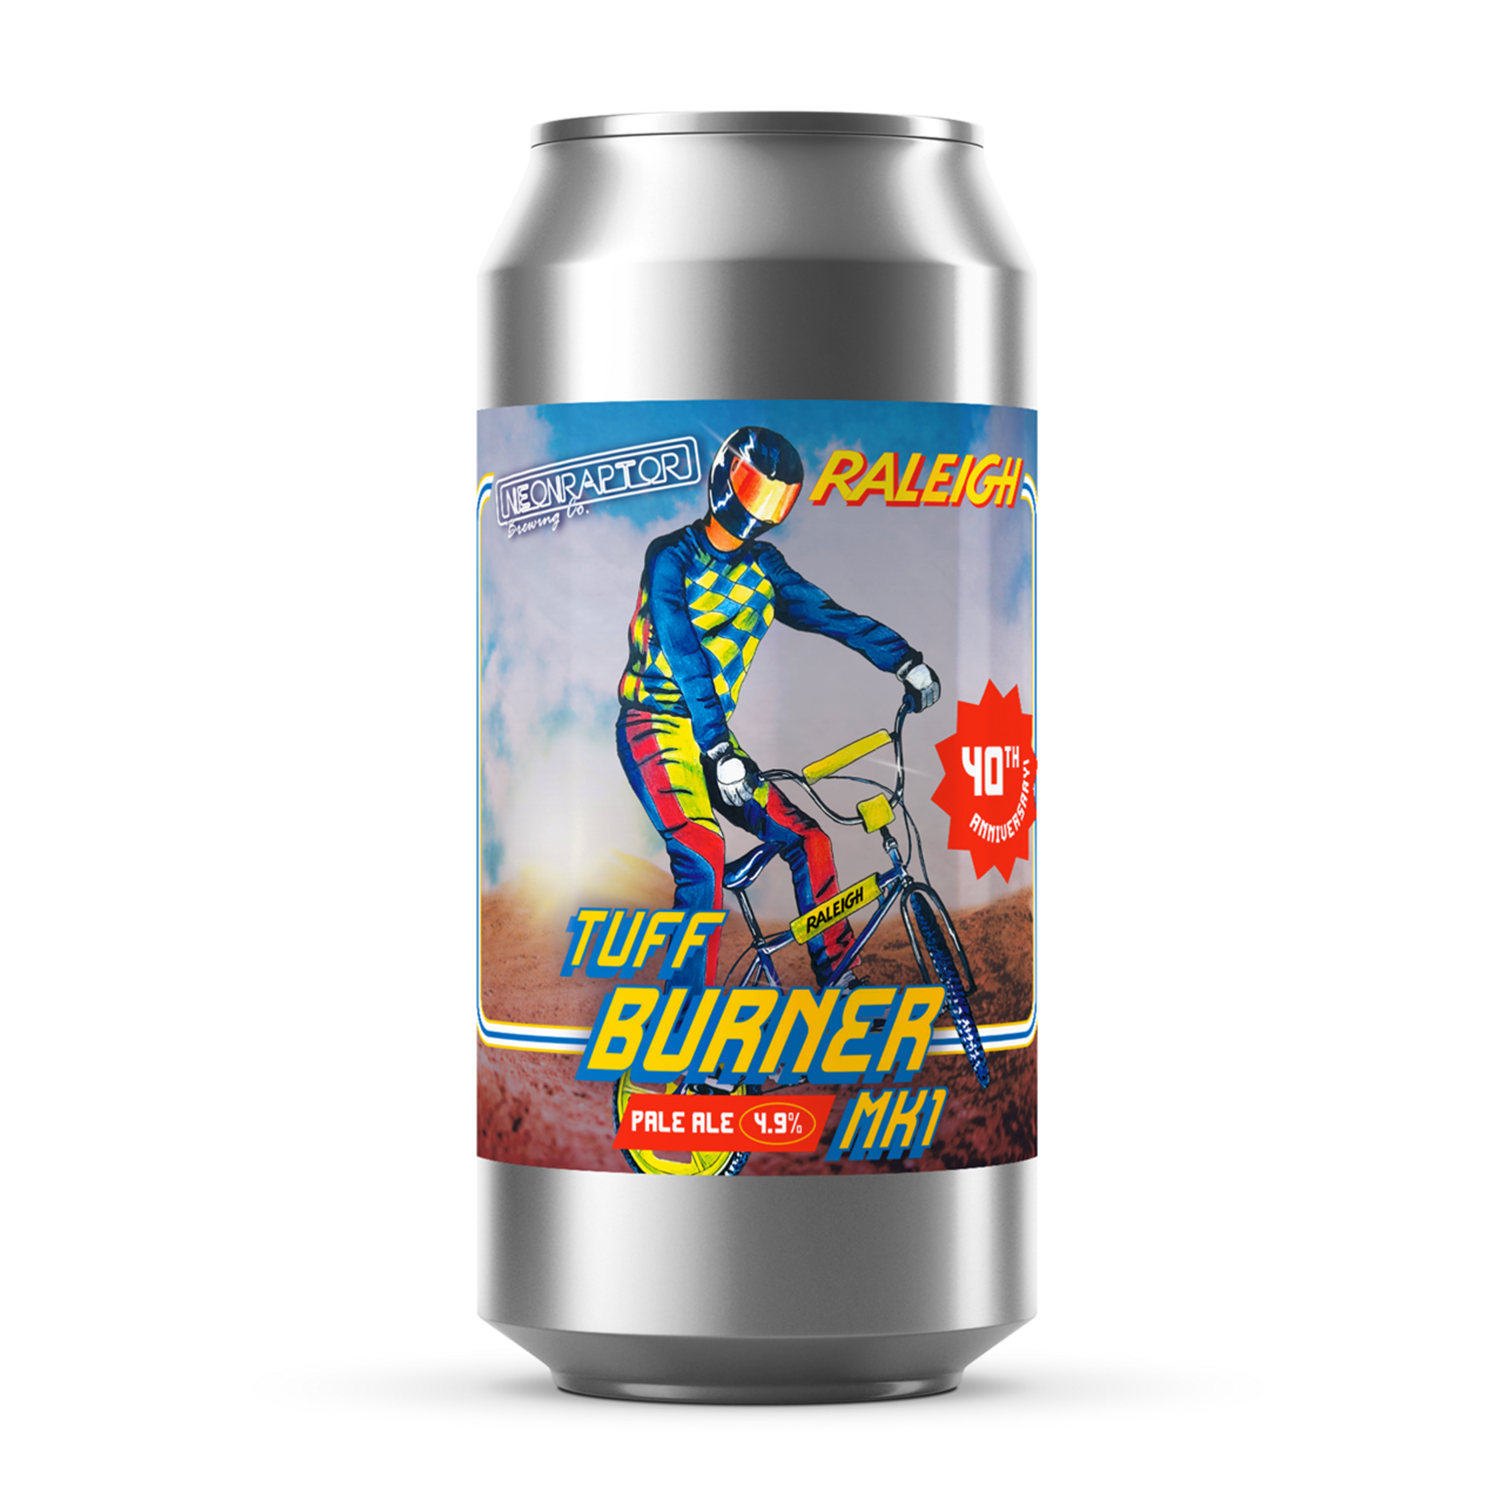 Neon Raptor x Raleigh Tuff Burner MK1 Pale Ale